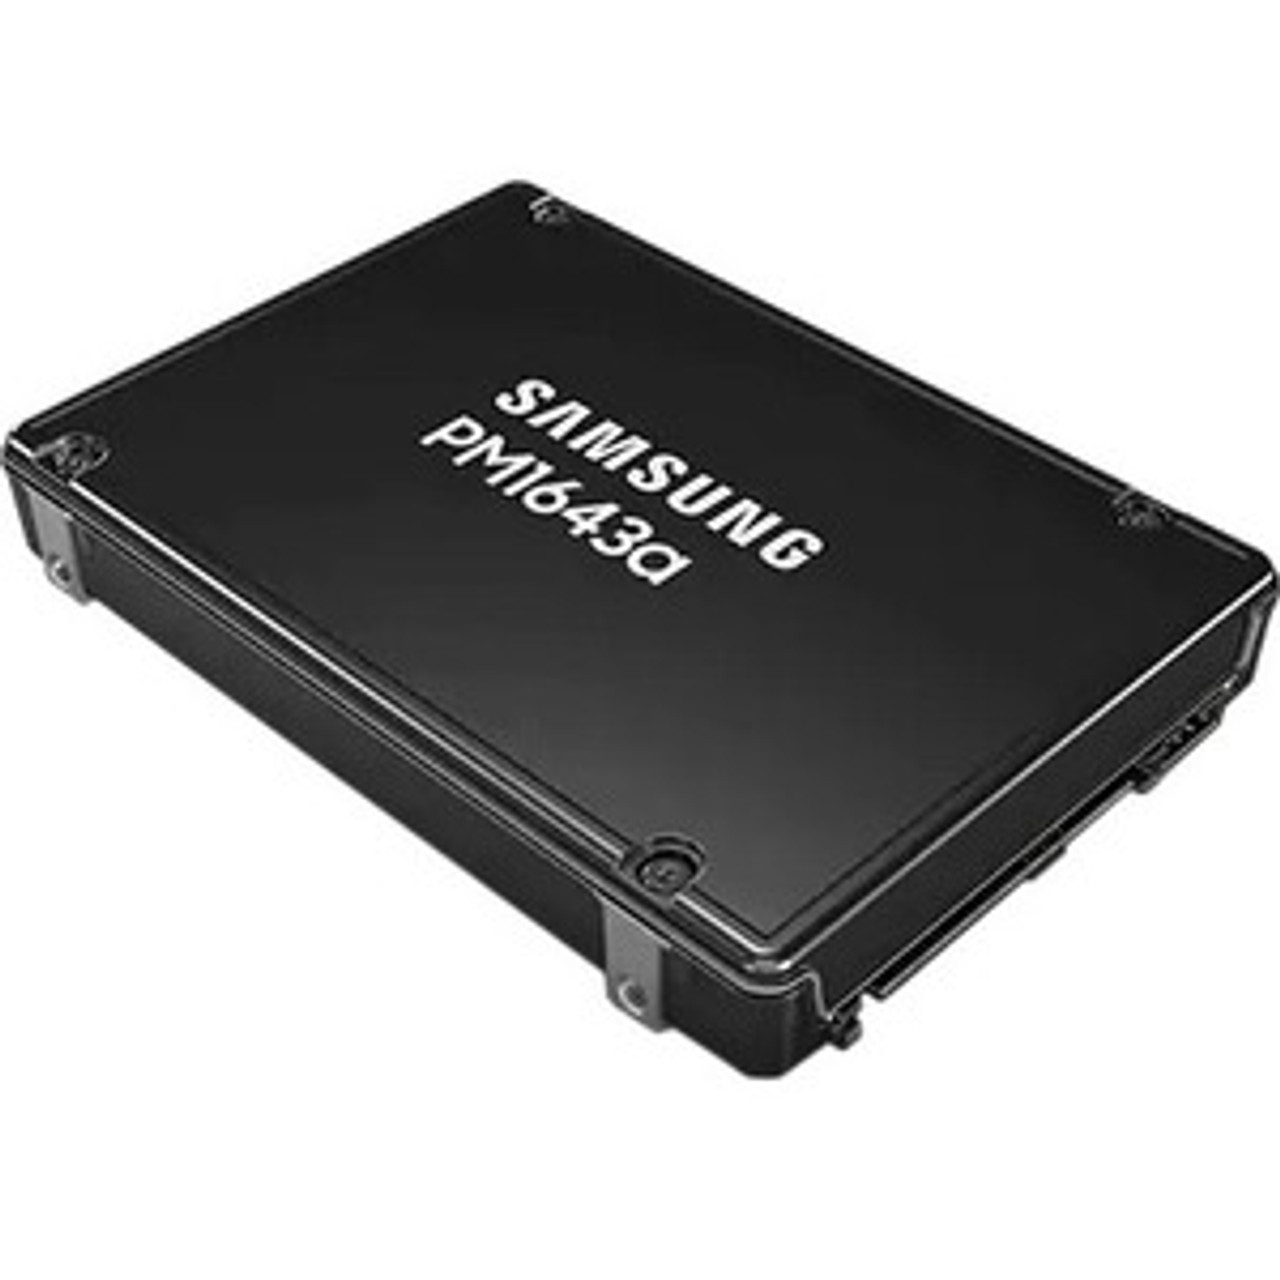 MZILT1T9HBJR-00007 Samsung PM1643a 1.92TB SAS 12Gbps 2.5-inch Internal Solid State Drive (SSD)